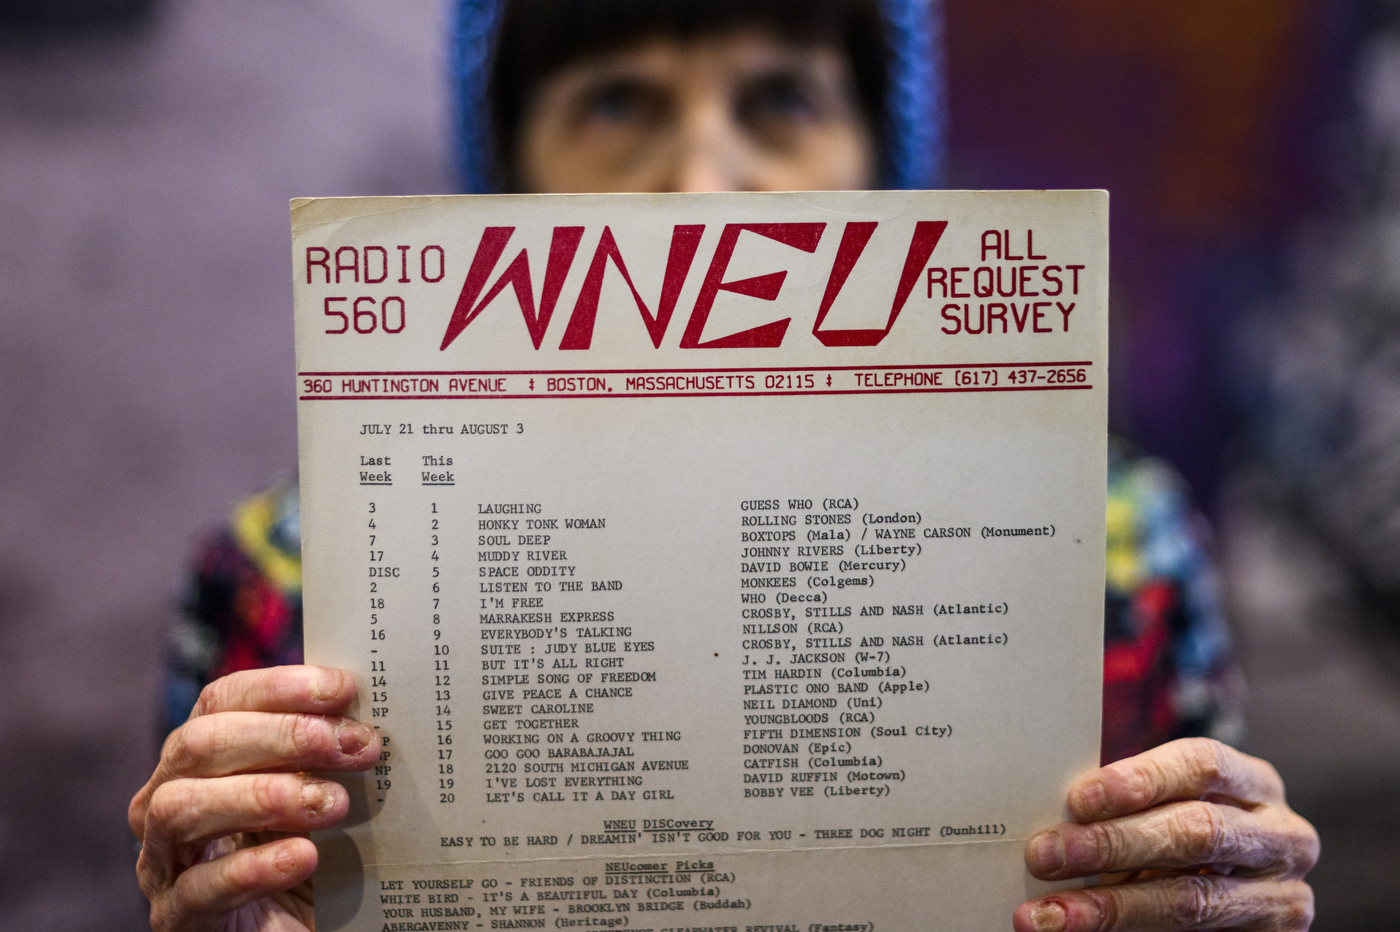 Donna Halper holding up a radio request survey